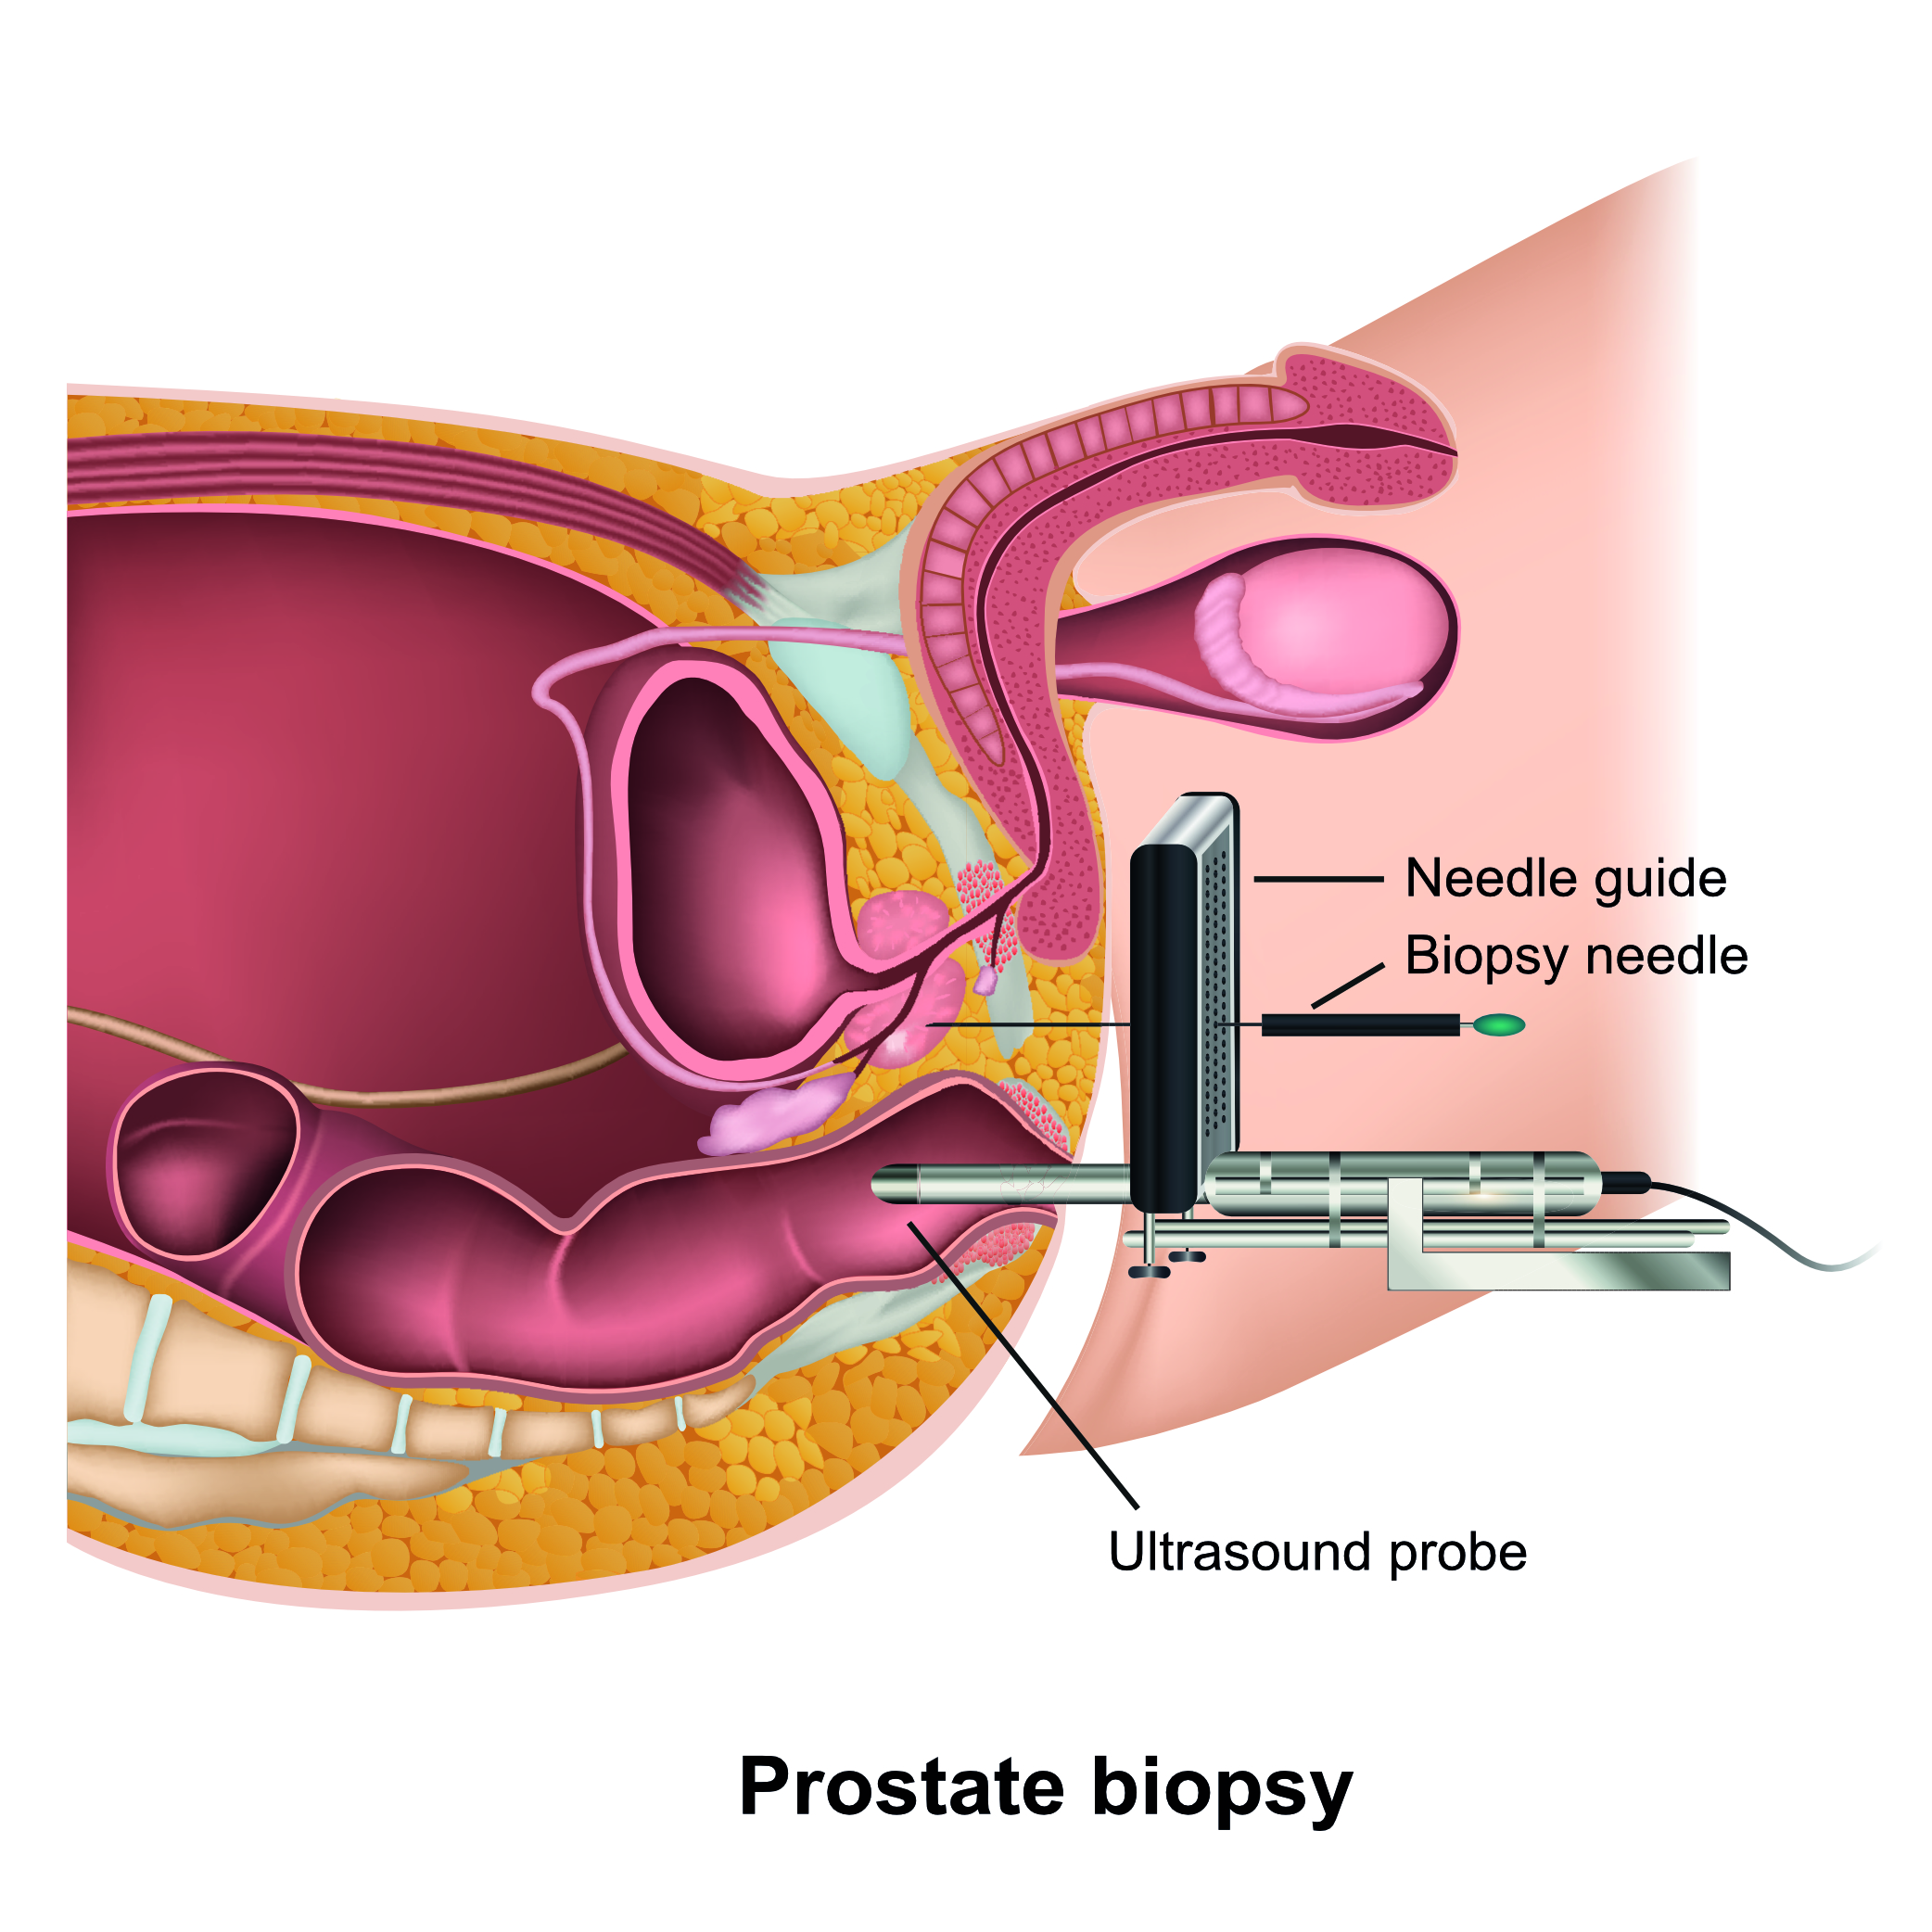 illustration showing transperineal prostate biospy